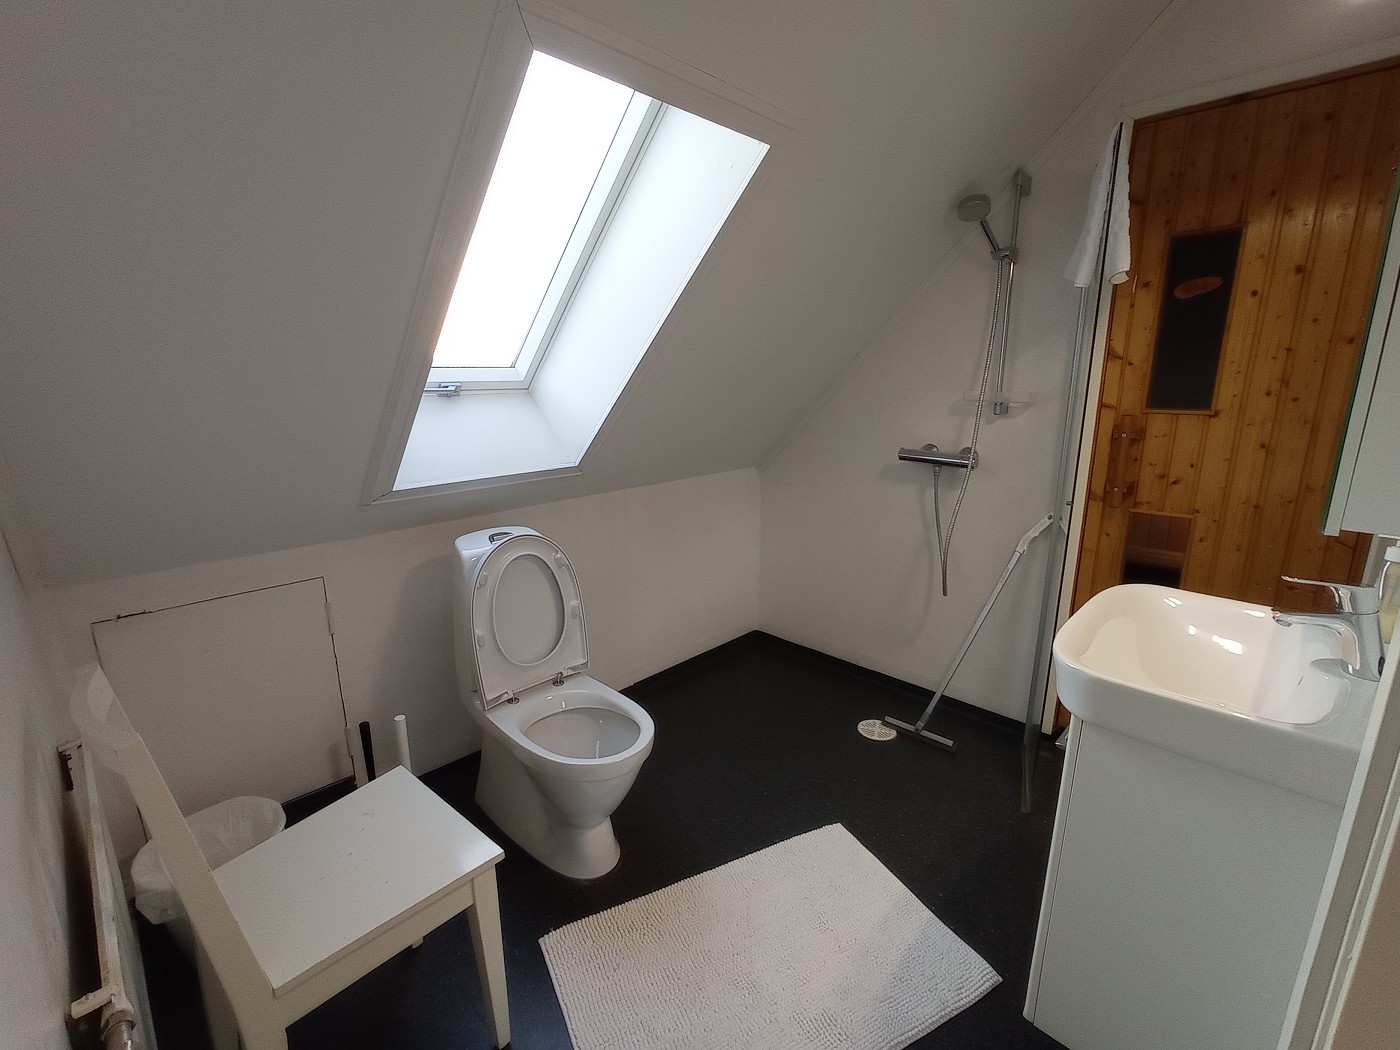 14 upstairs bathroom with shower and sauna Karlby Kökar accommodation in the Åland Islands